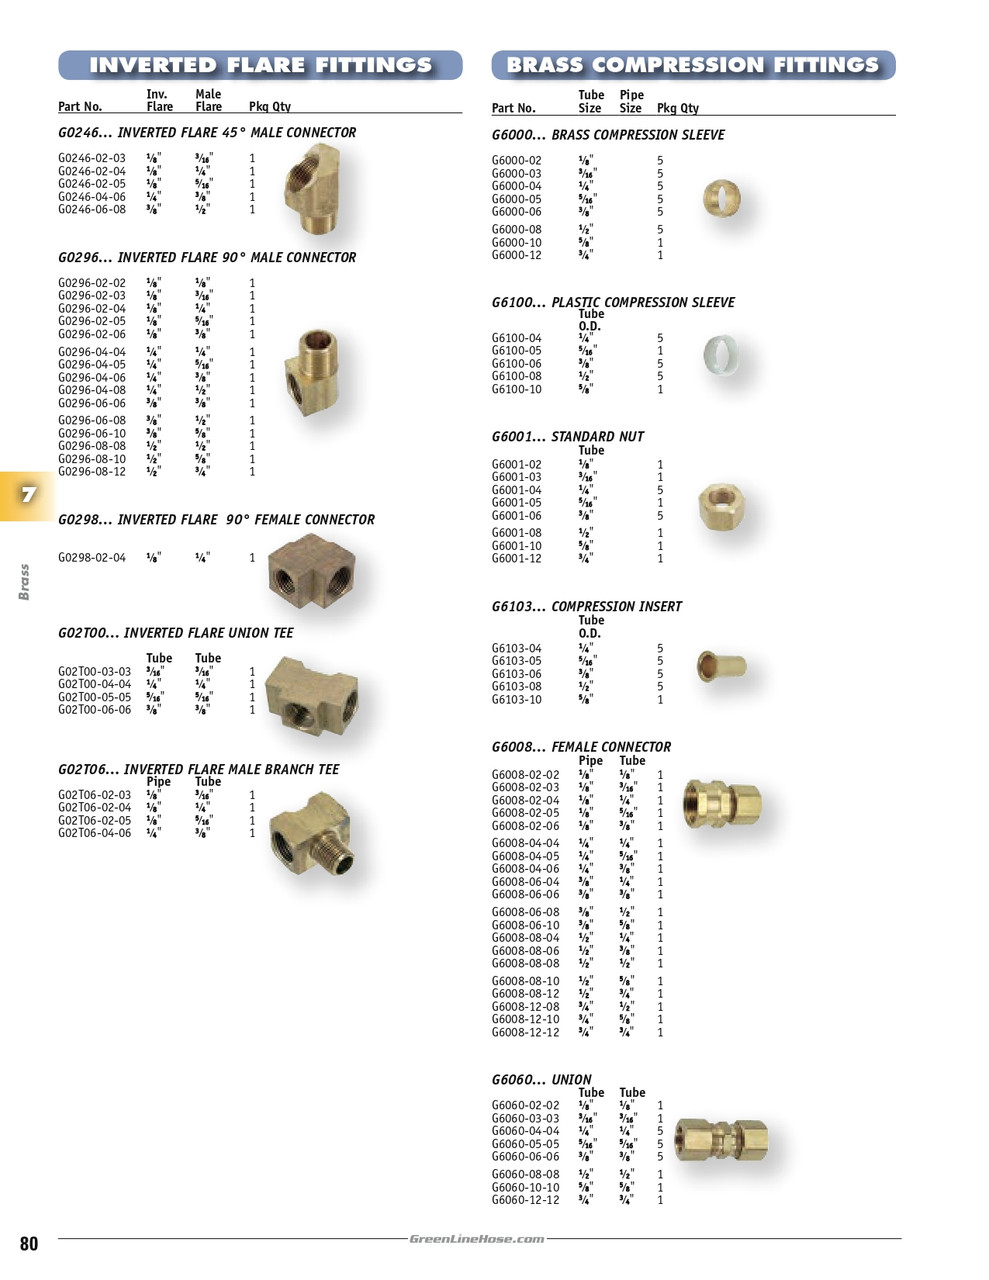 3/16" Brass Compression Union   G6060-03-03